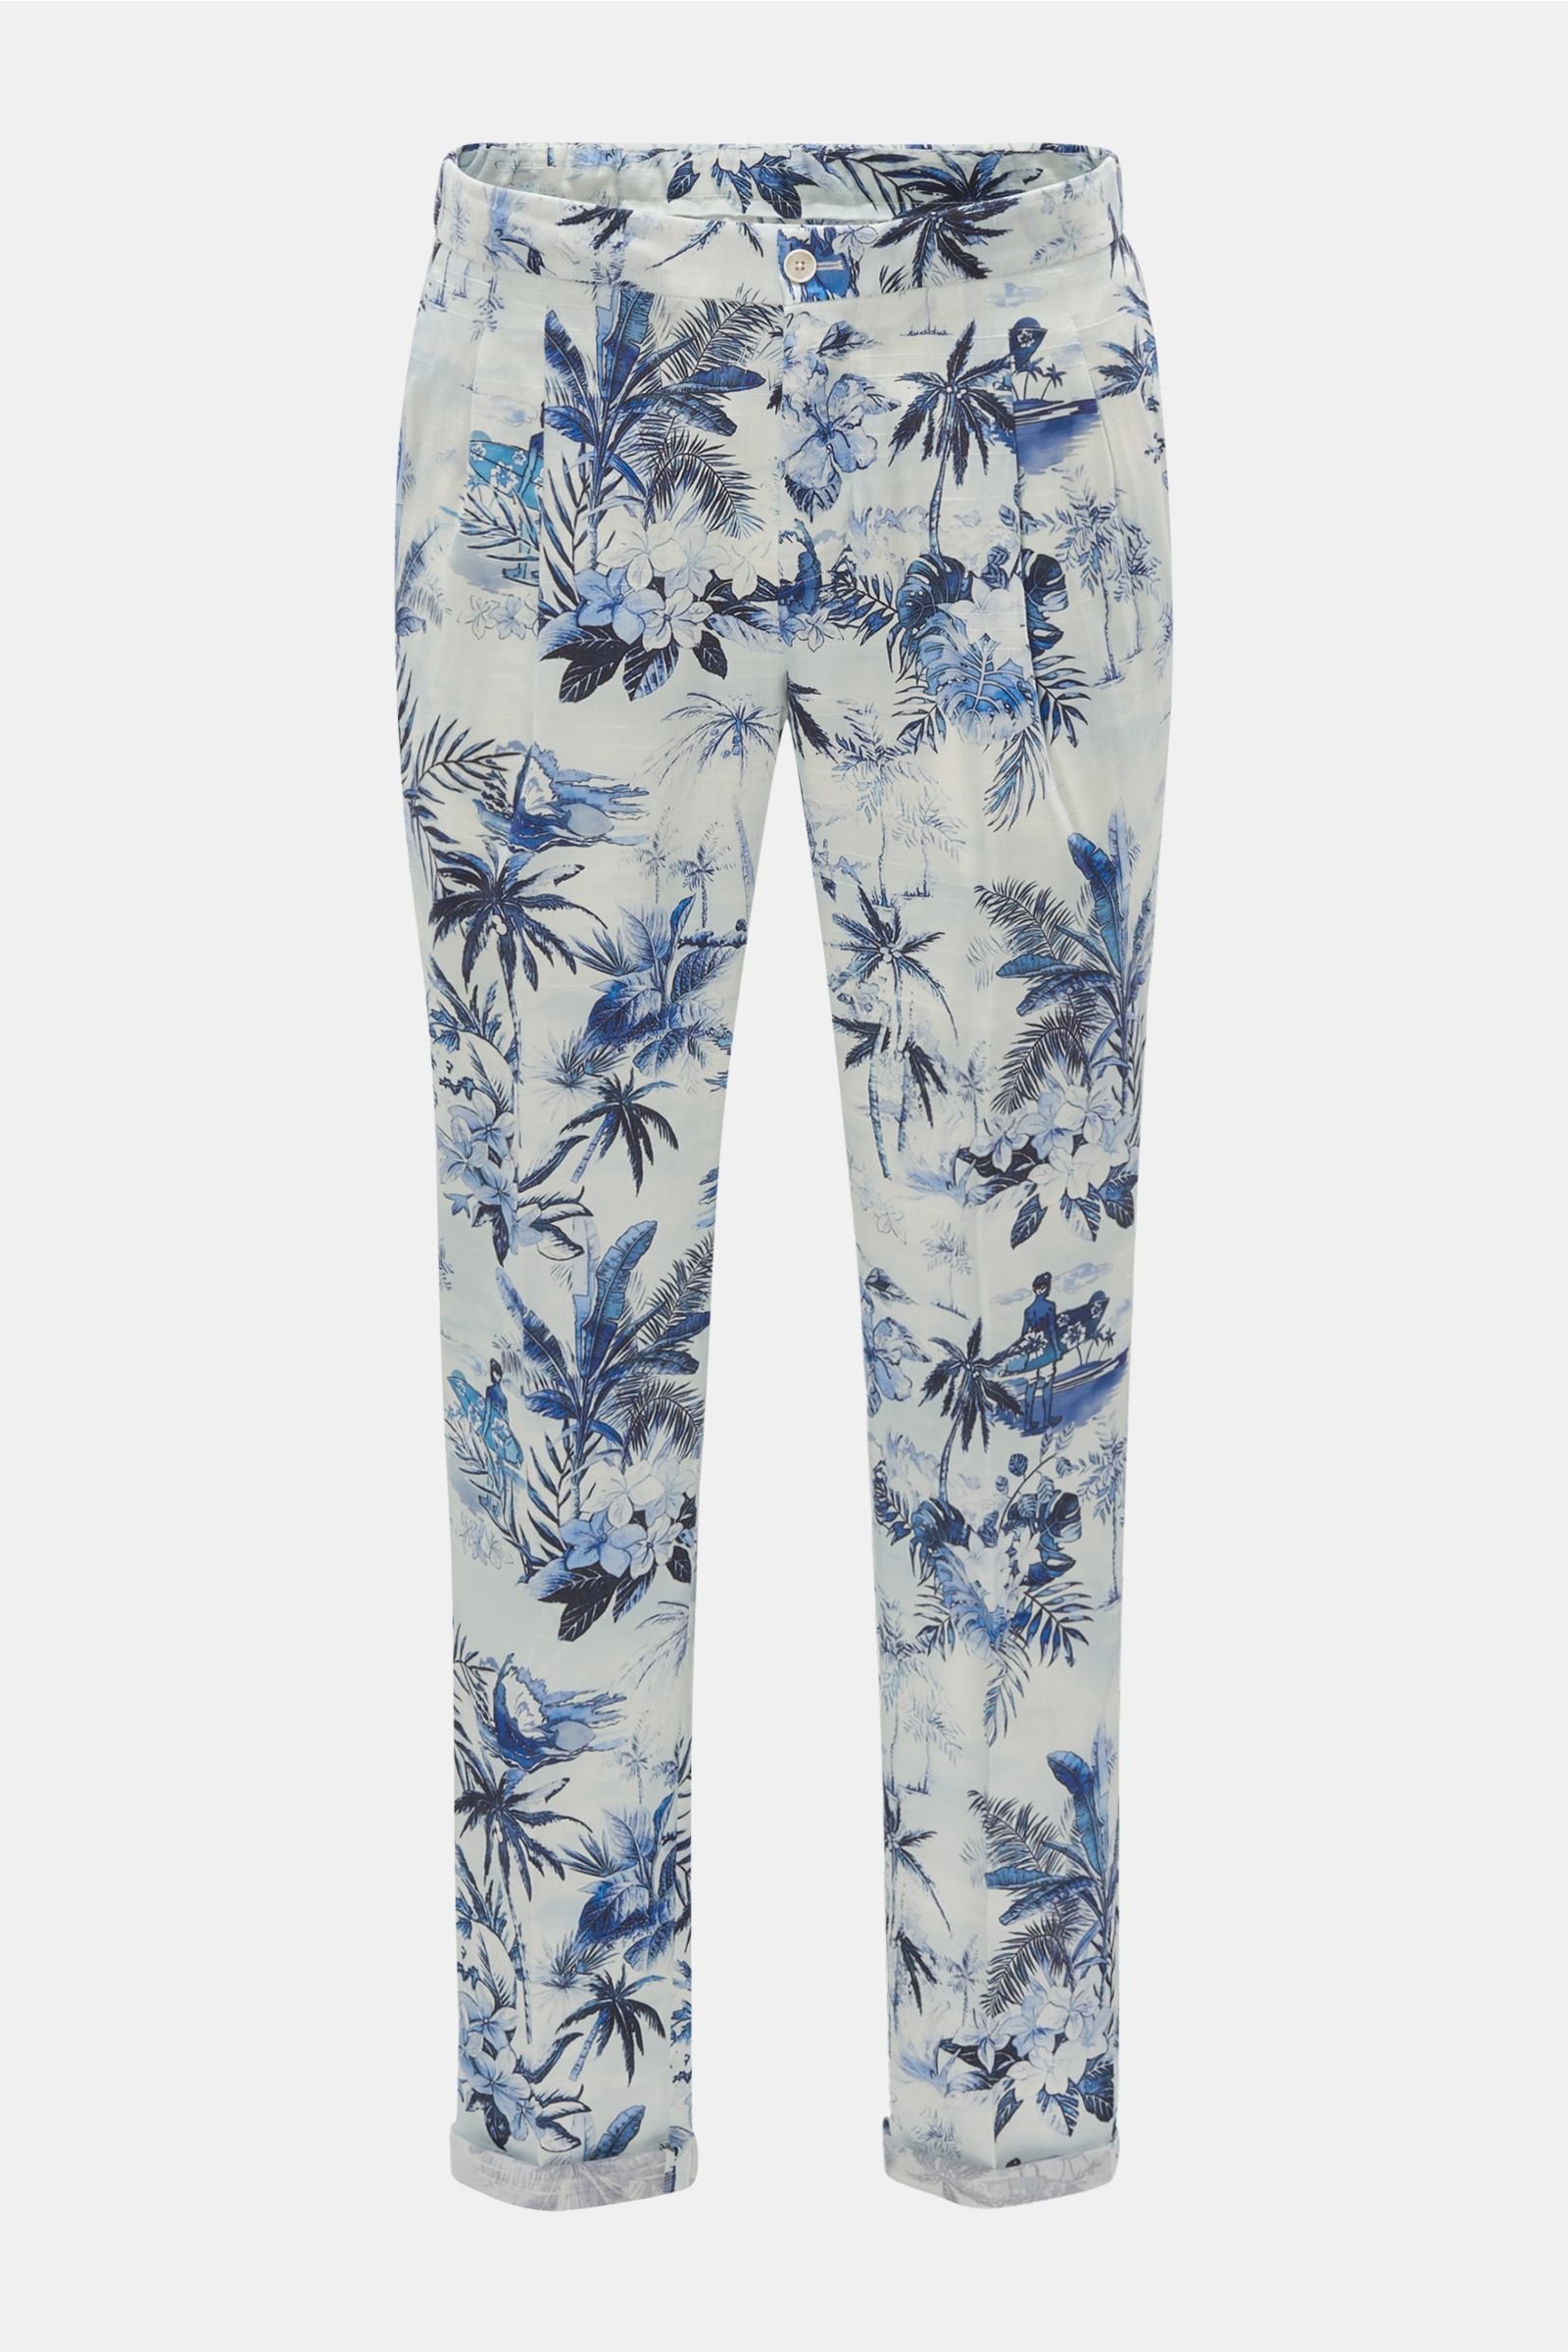 Cotton jogger pants 'Sonny' navy/white patterned